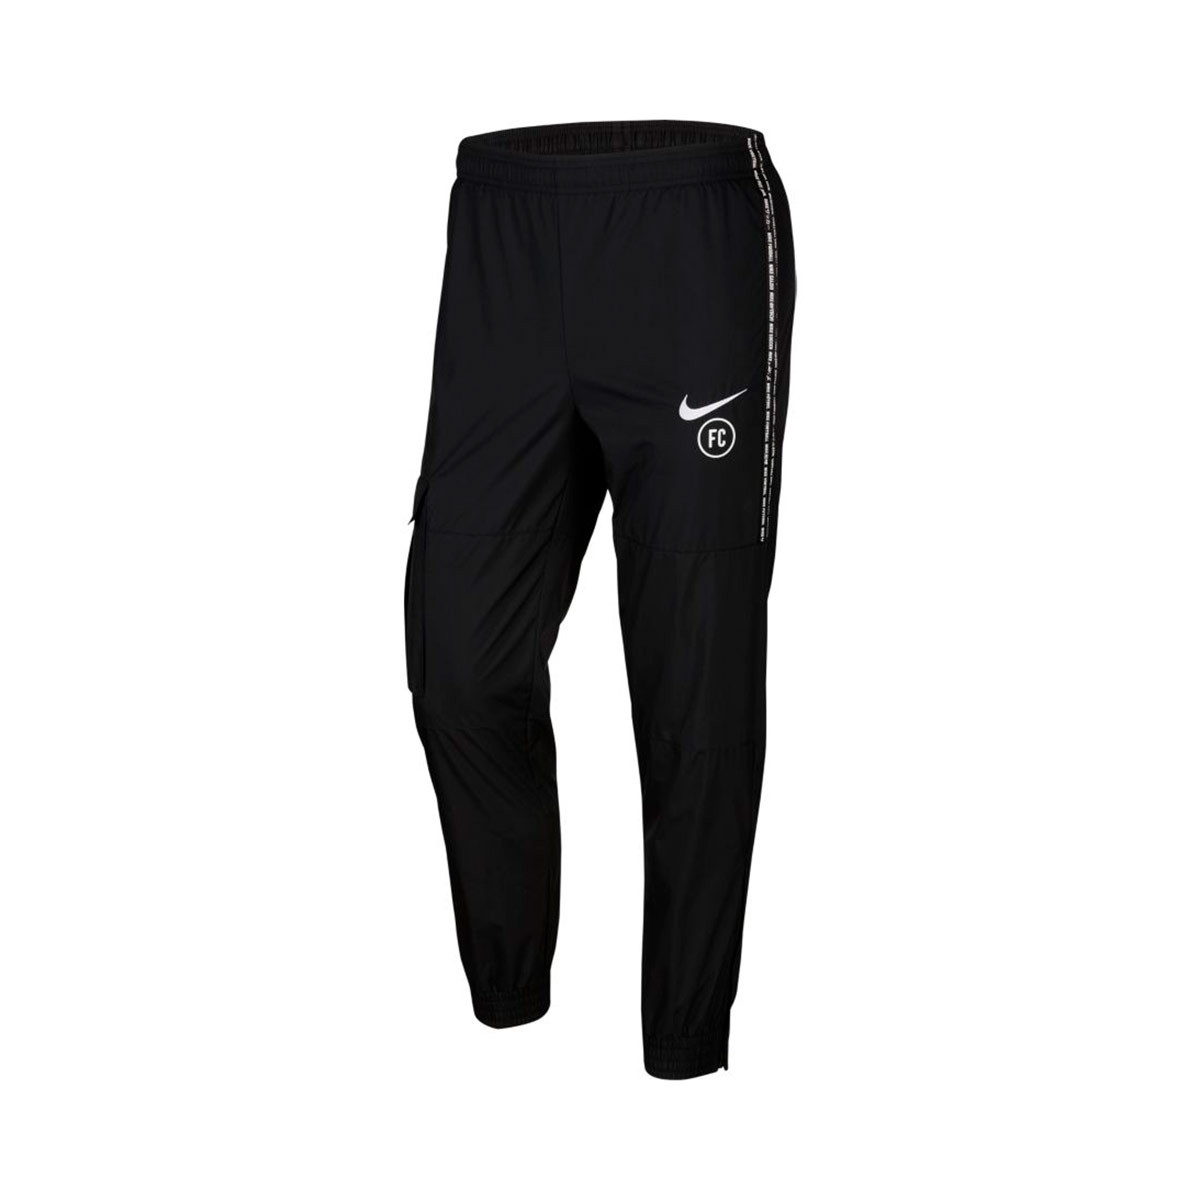 Long pants Nike FC Track WPZ Black 